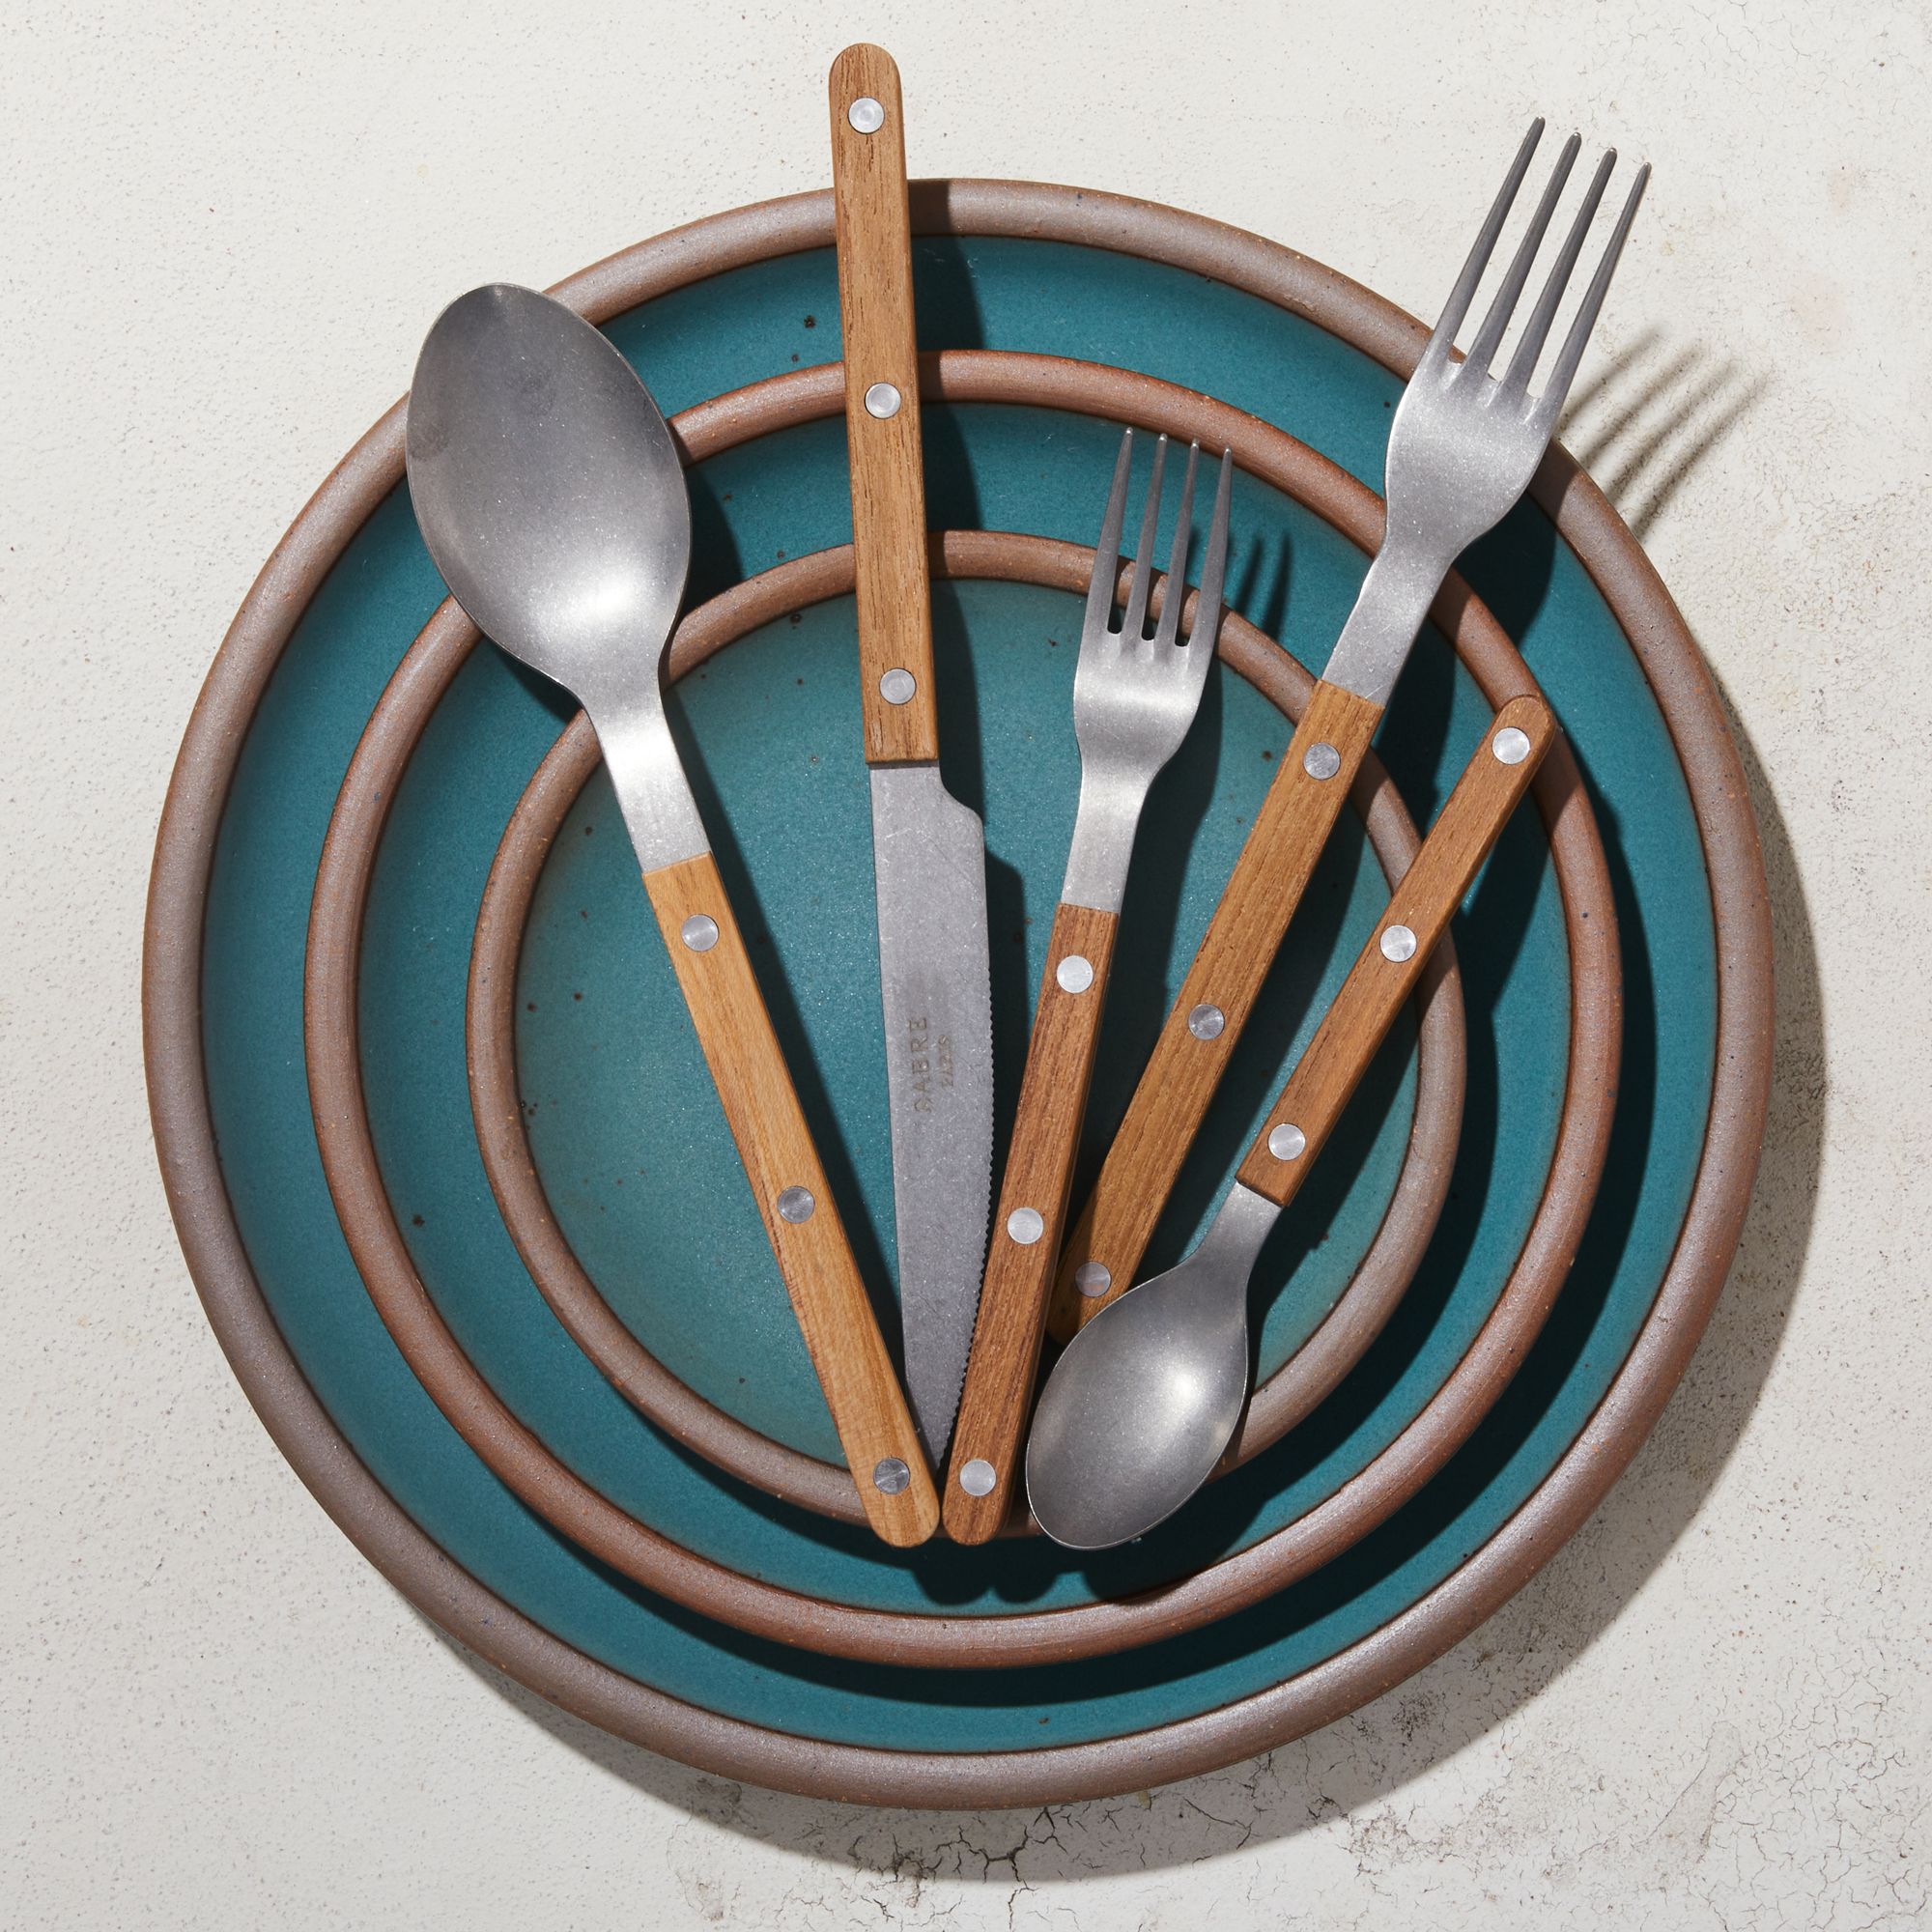 Silverware set with teak handles on Secret Beach Plate stack